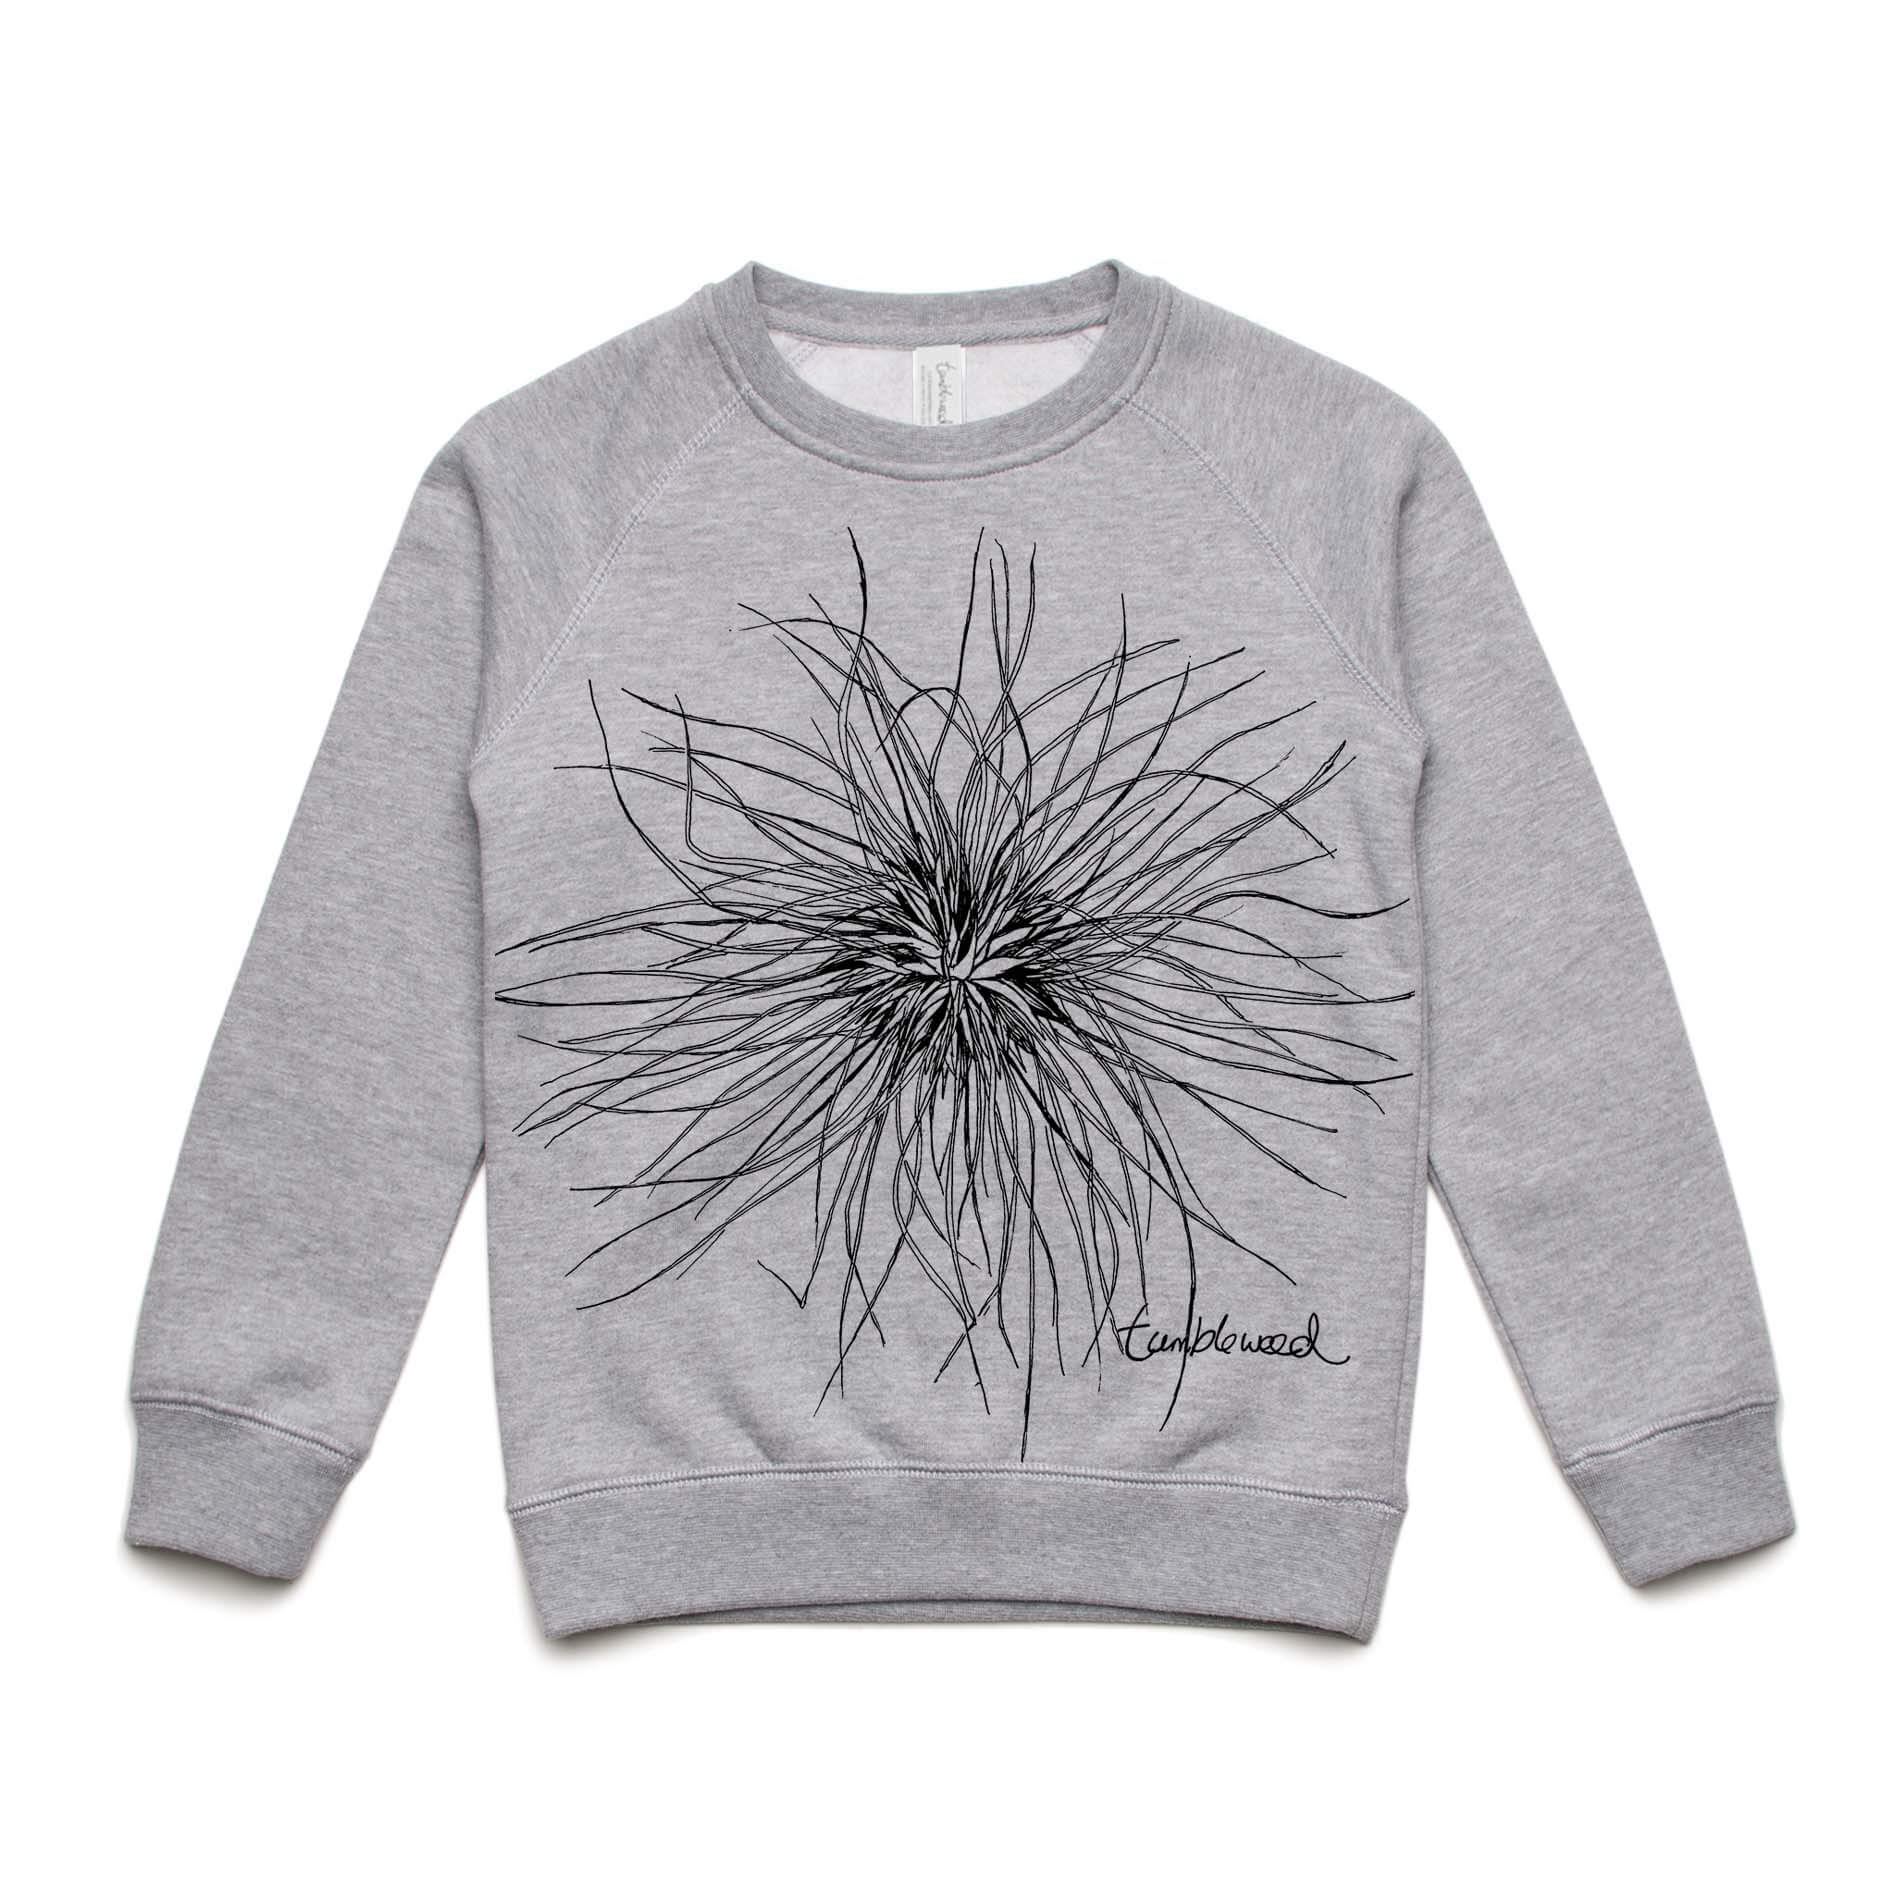 Kids' grey marle sweatshirt featuring a screen printed Tumbleweed design.